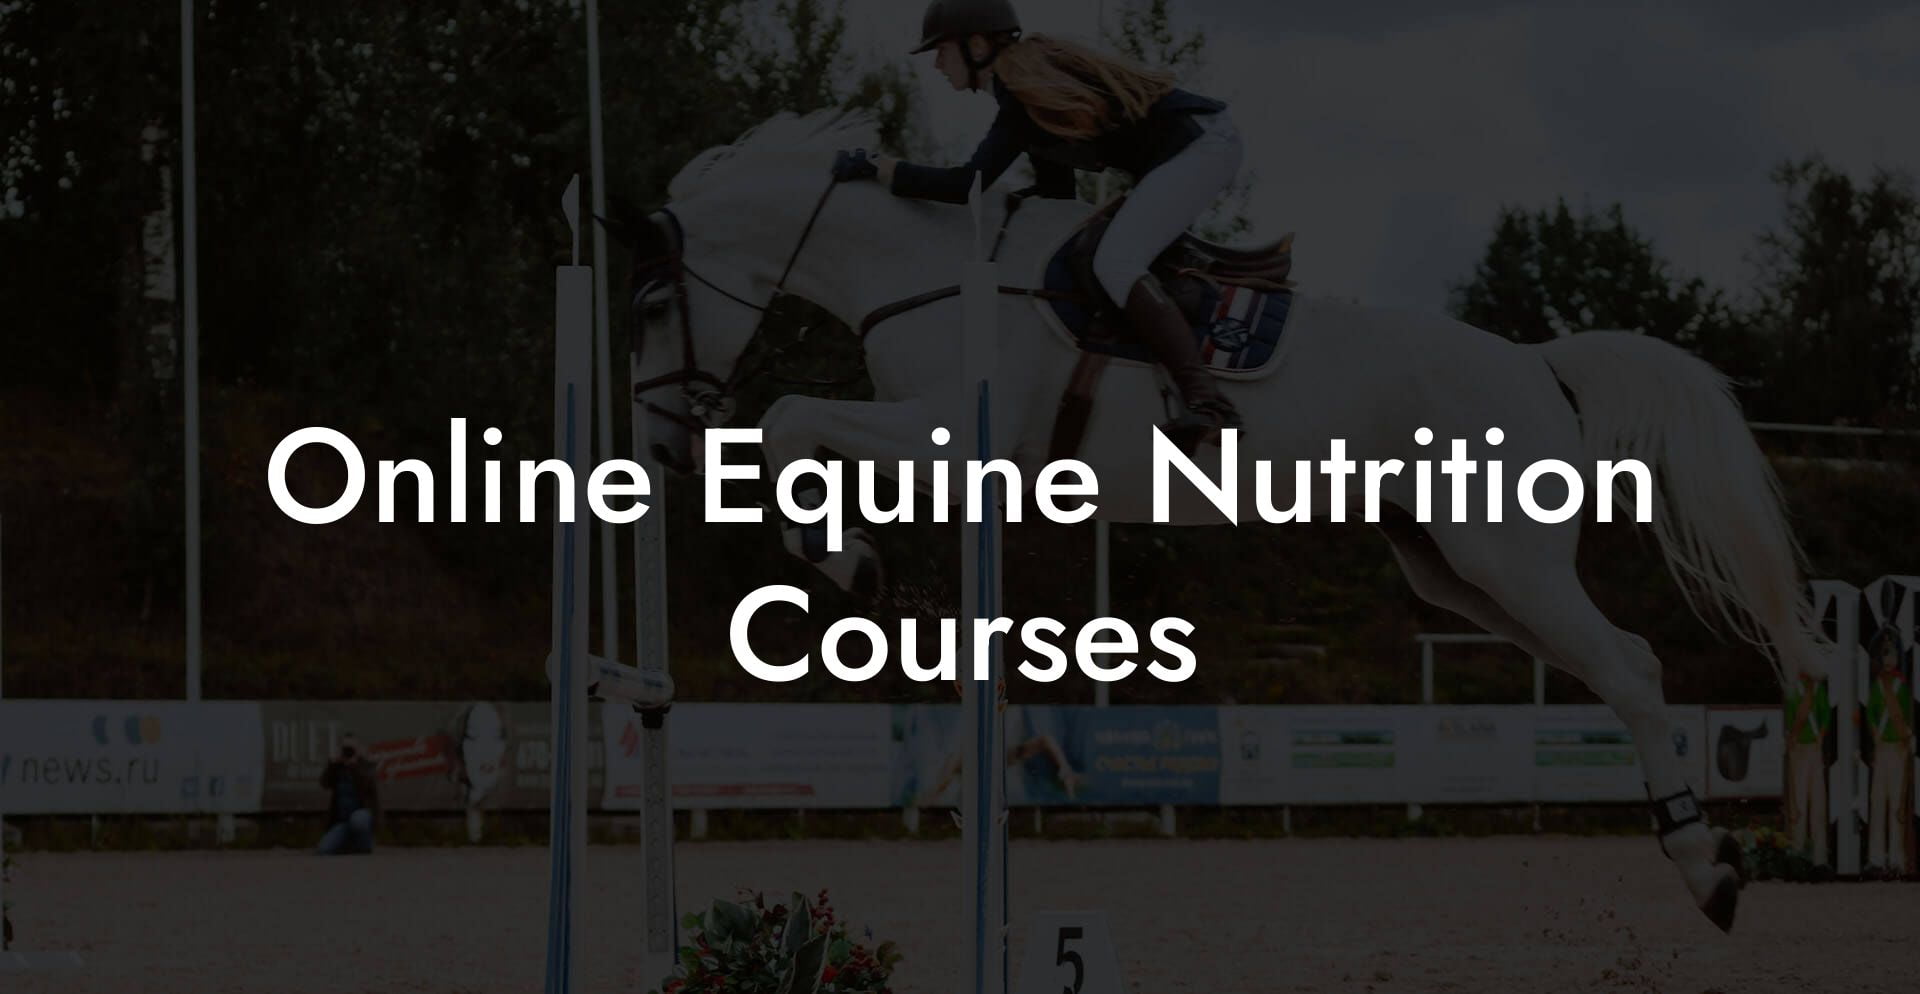 Online Equine Nutrition Courses